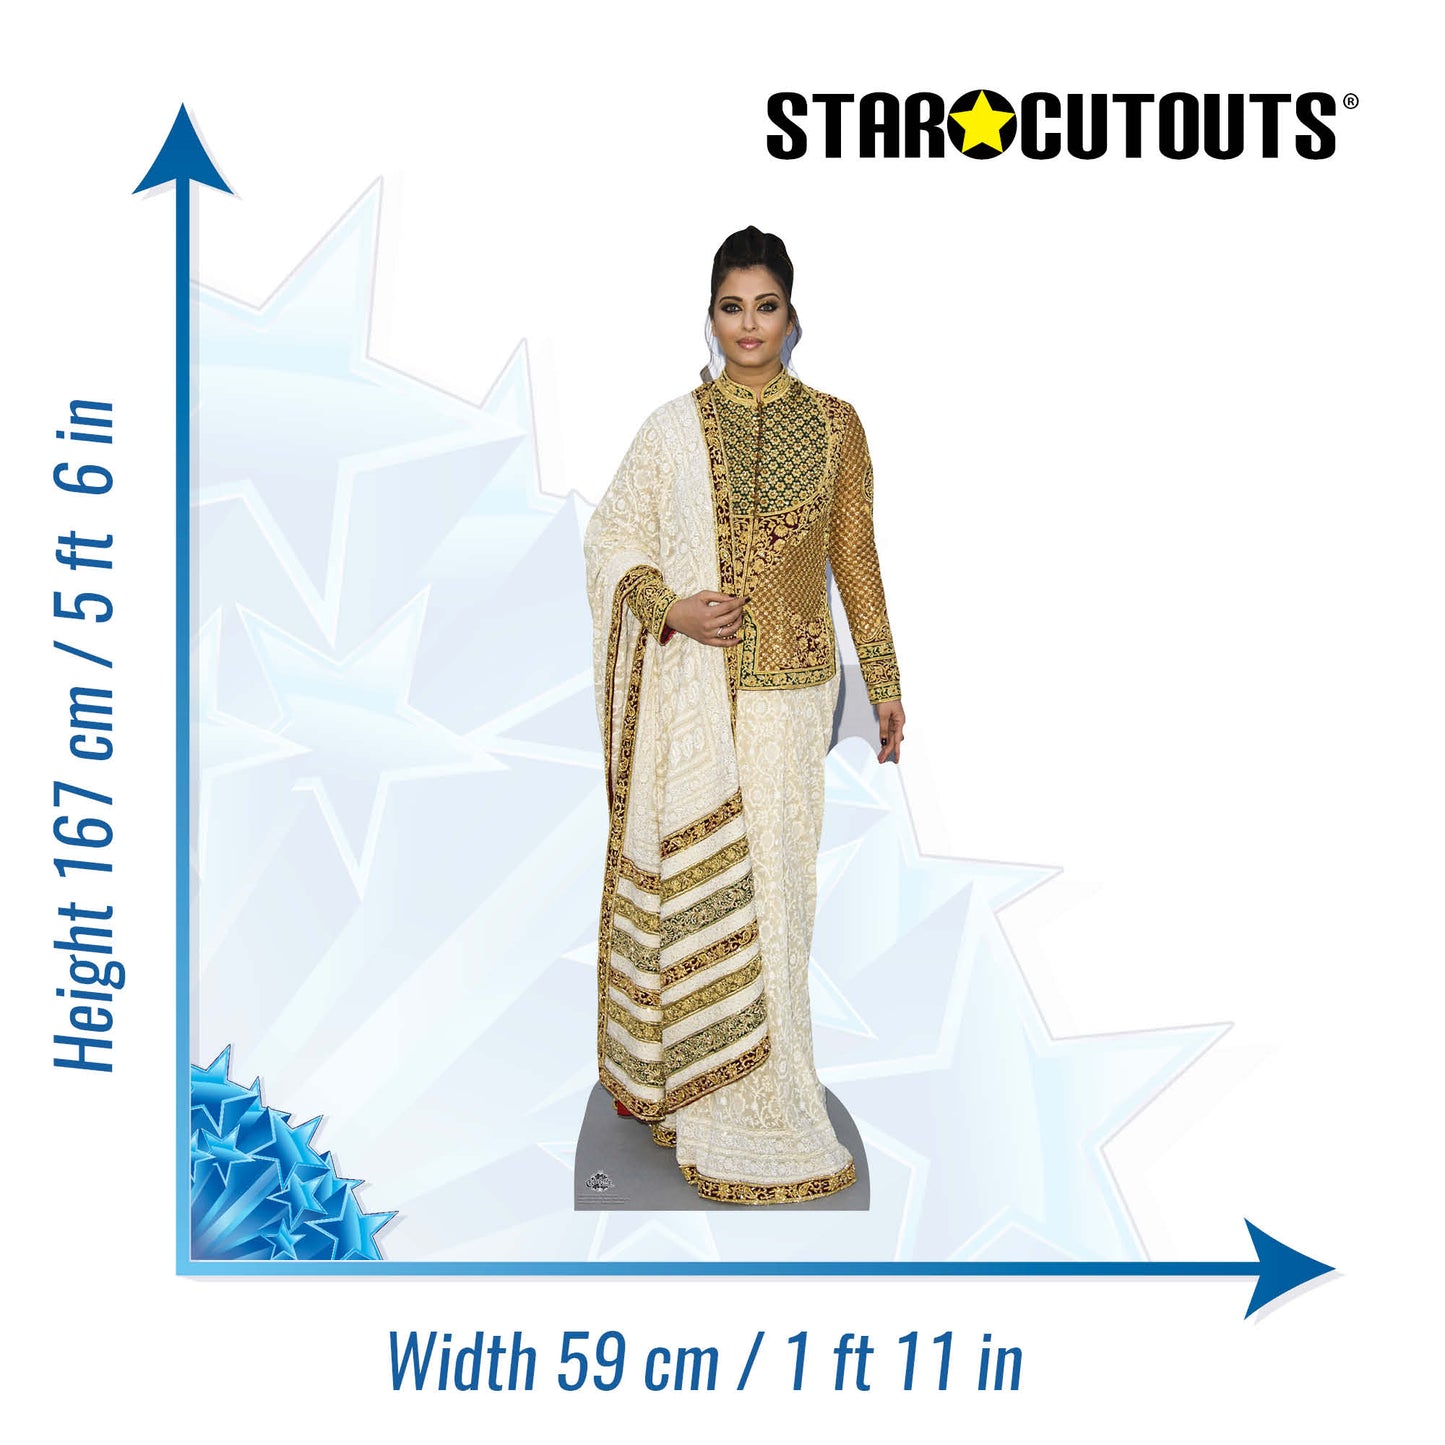 CS584 Aishwarya Rain bachchan Height 167cm Lifesize Cardboard Cutout